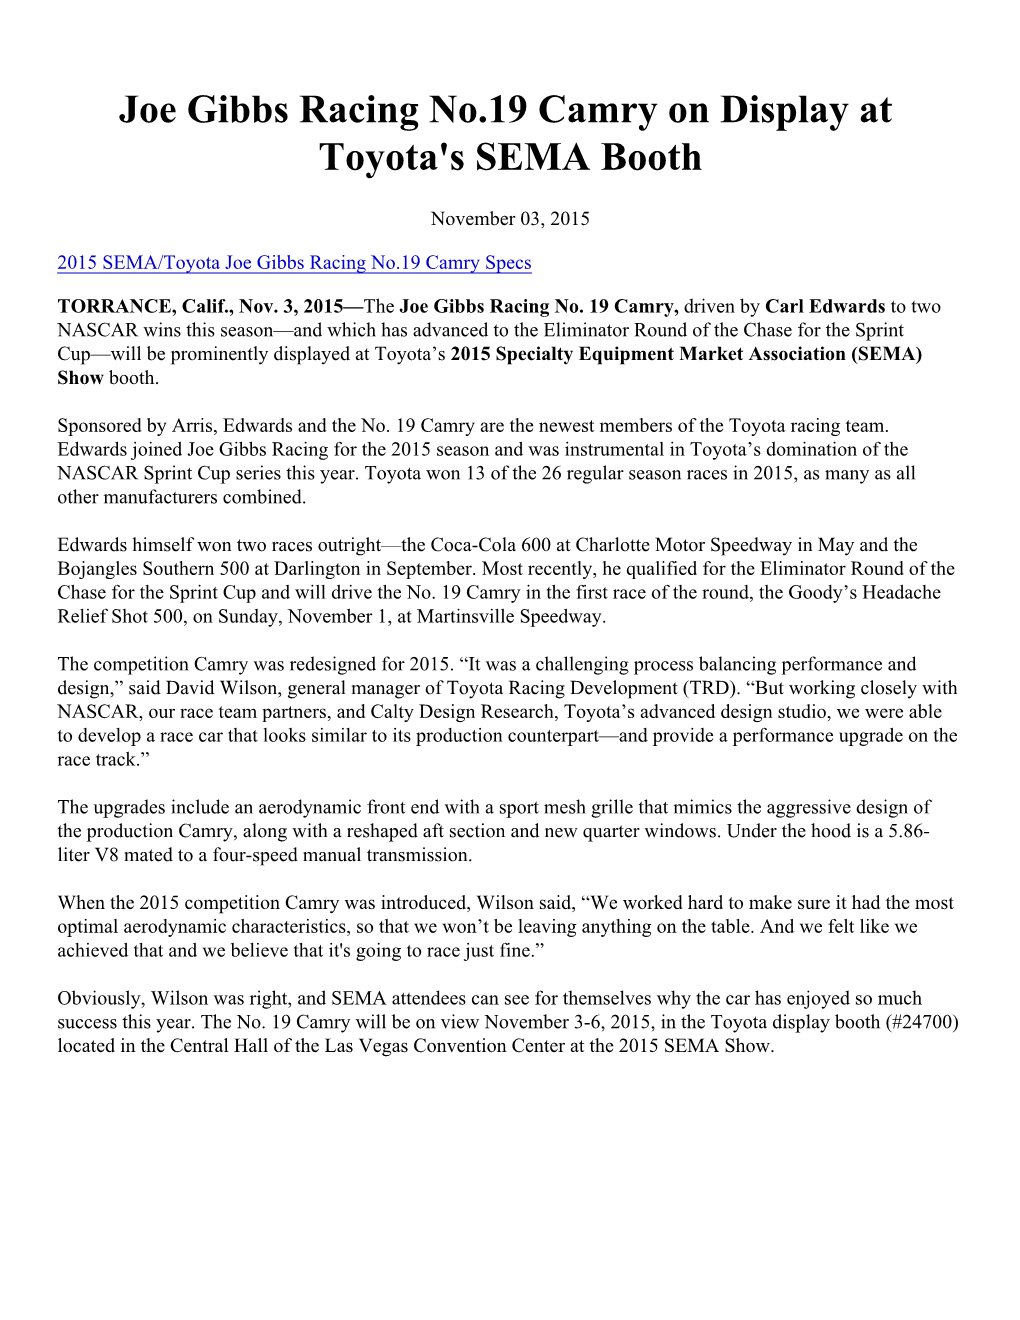 Joe Gibbs Racing No.19 Camry on Display at Toyota's SEMA Booth